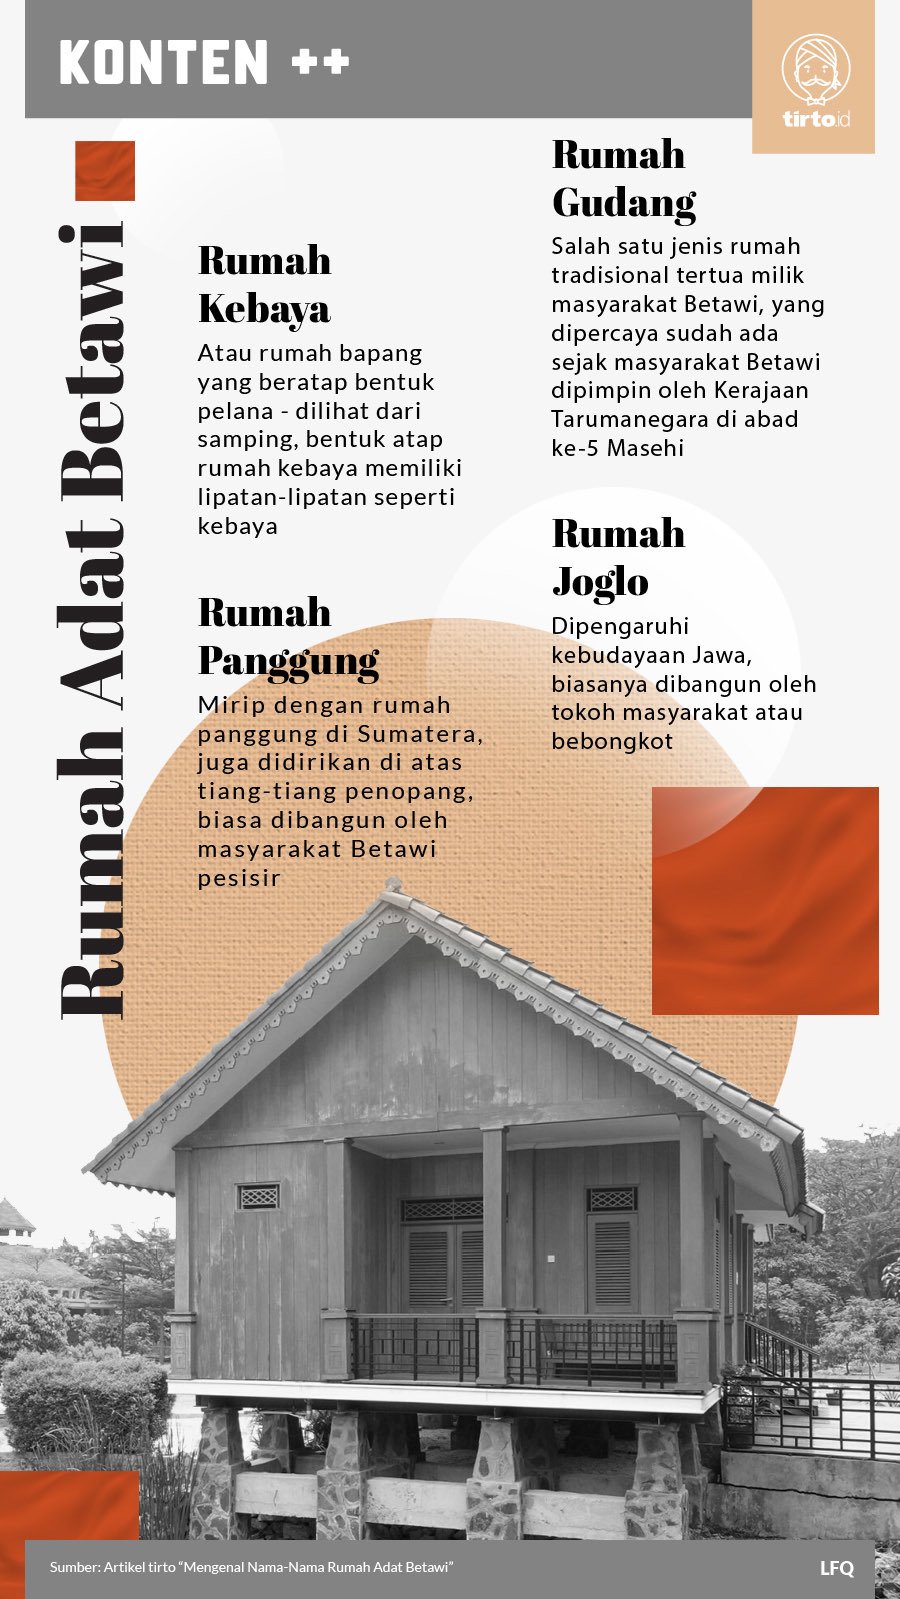 Memiliki rumah kolong yang rumah adalah panggung tinggi Arsitektur Sunda